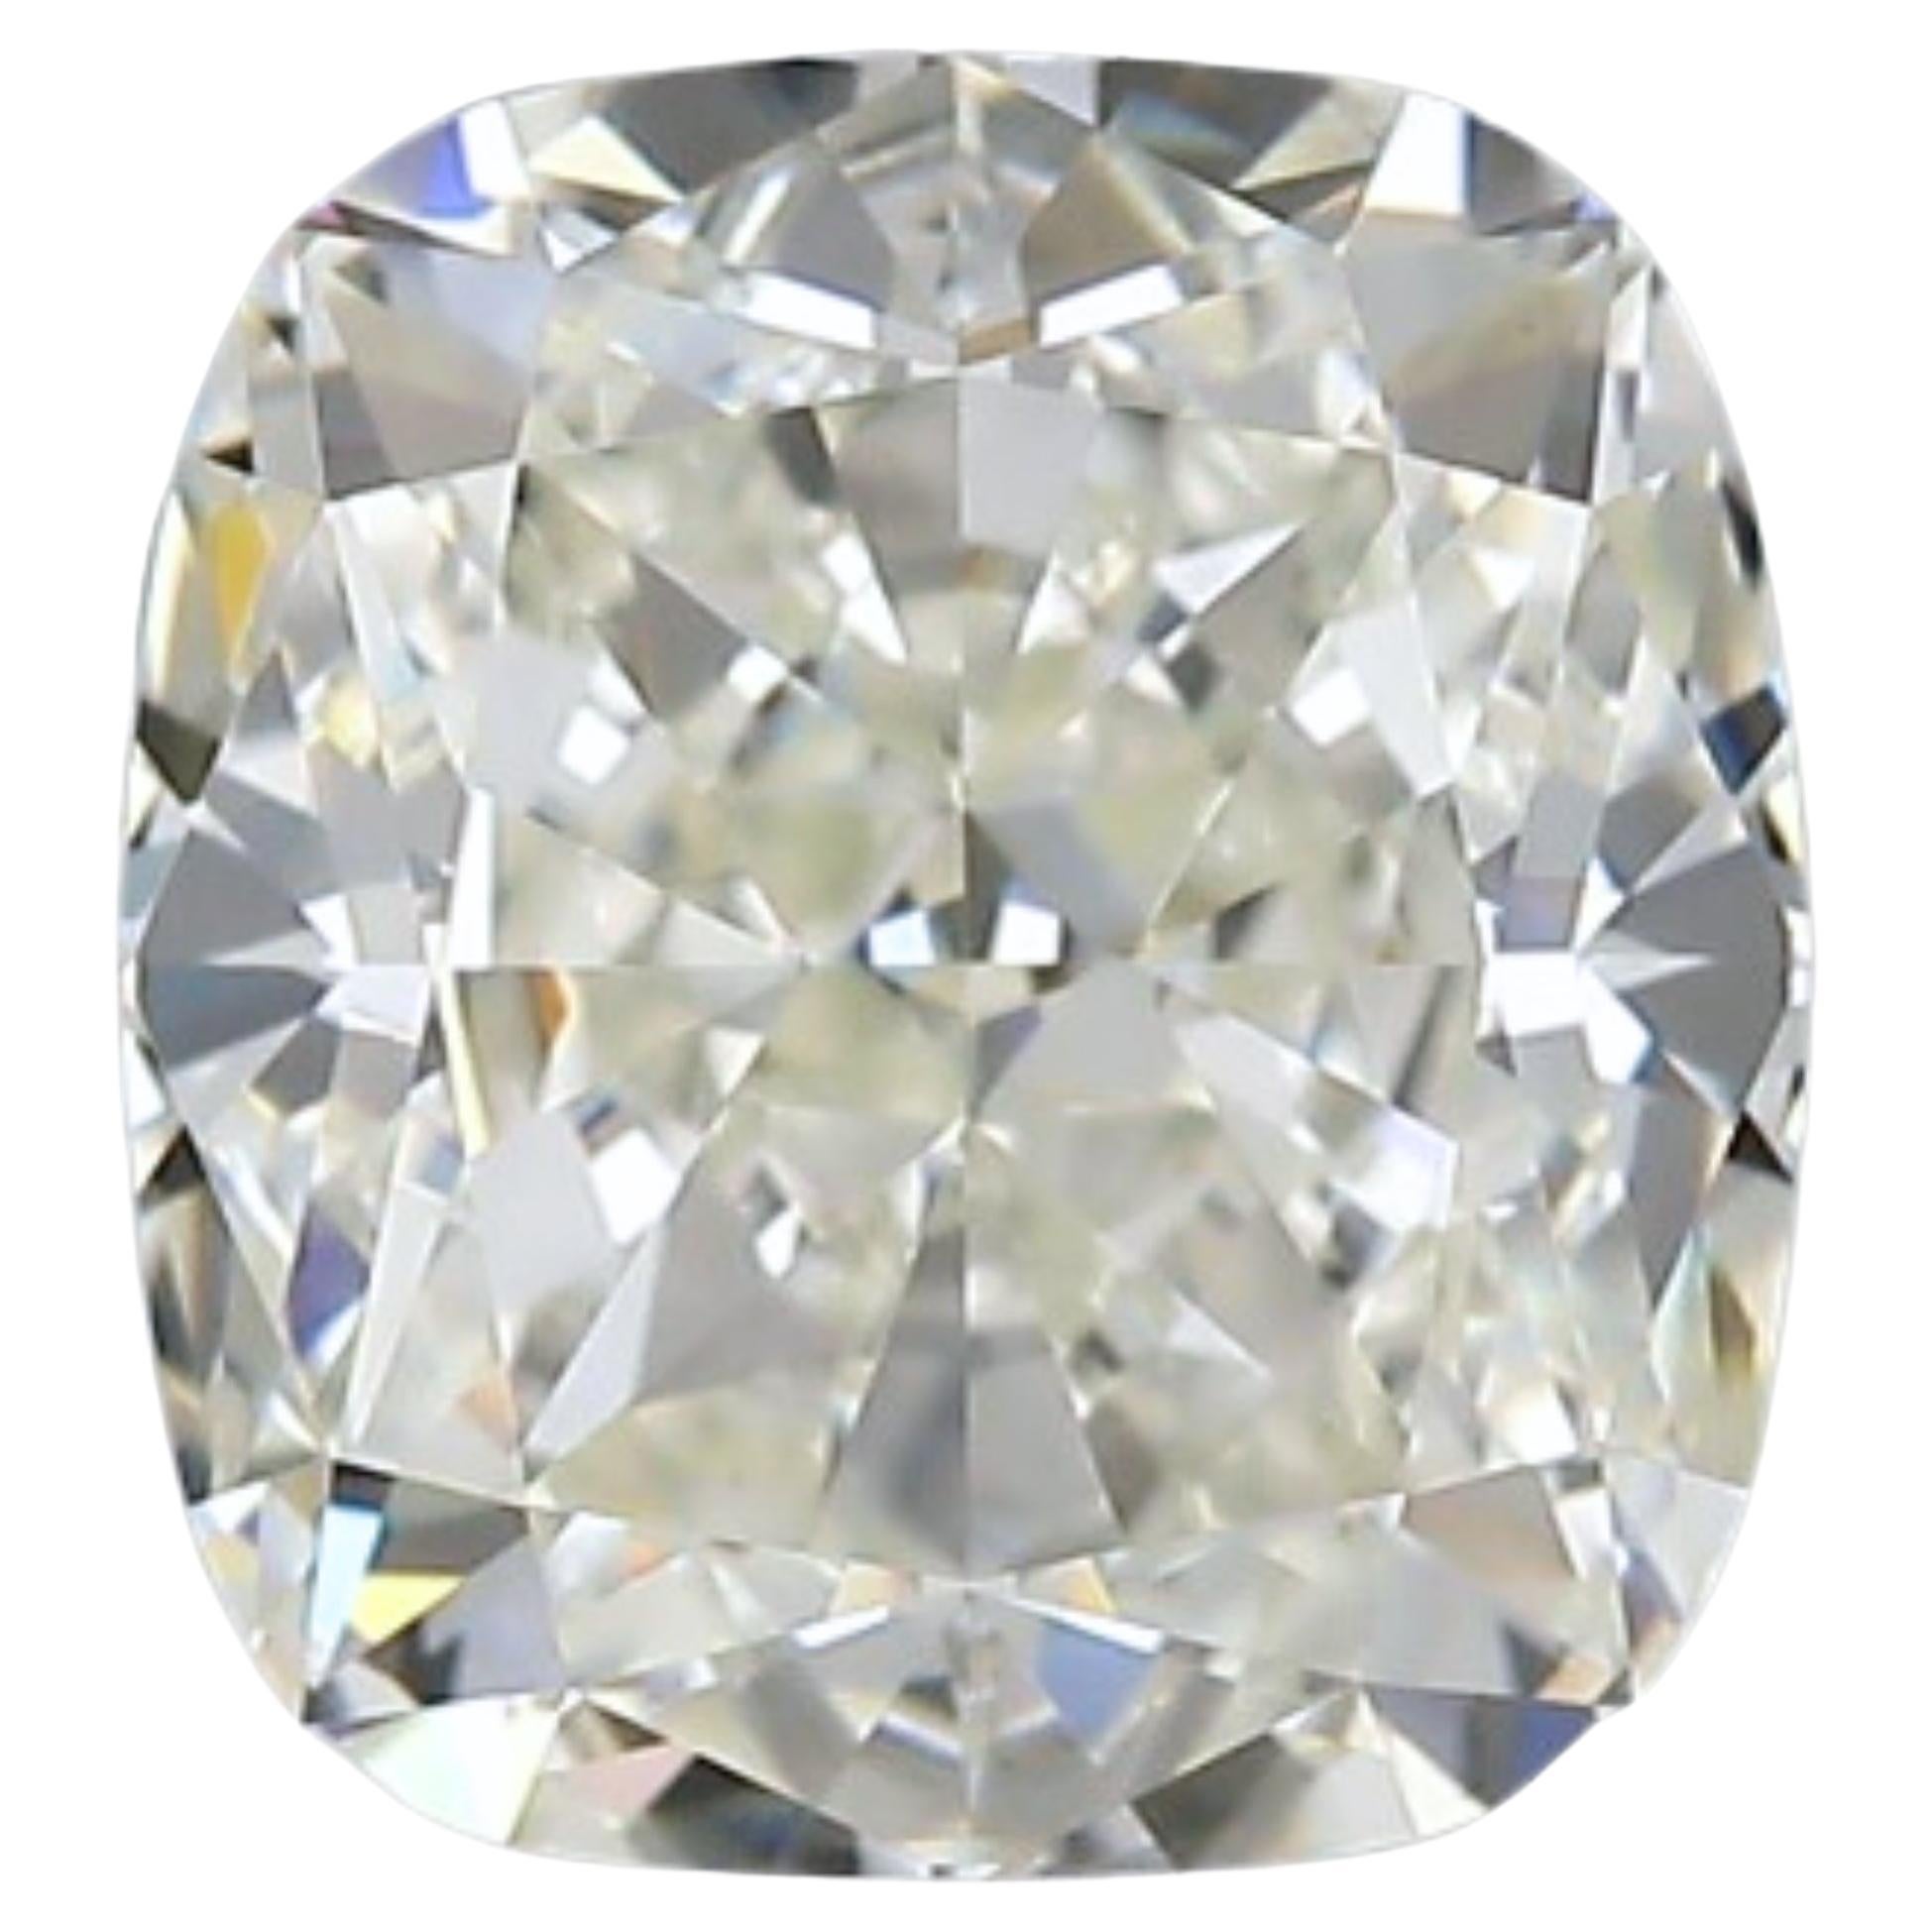 1pc Stunning Natural cut Cushion diamond in a 1.51 carat